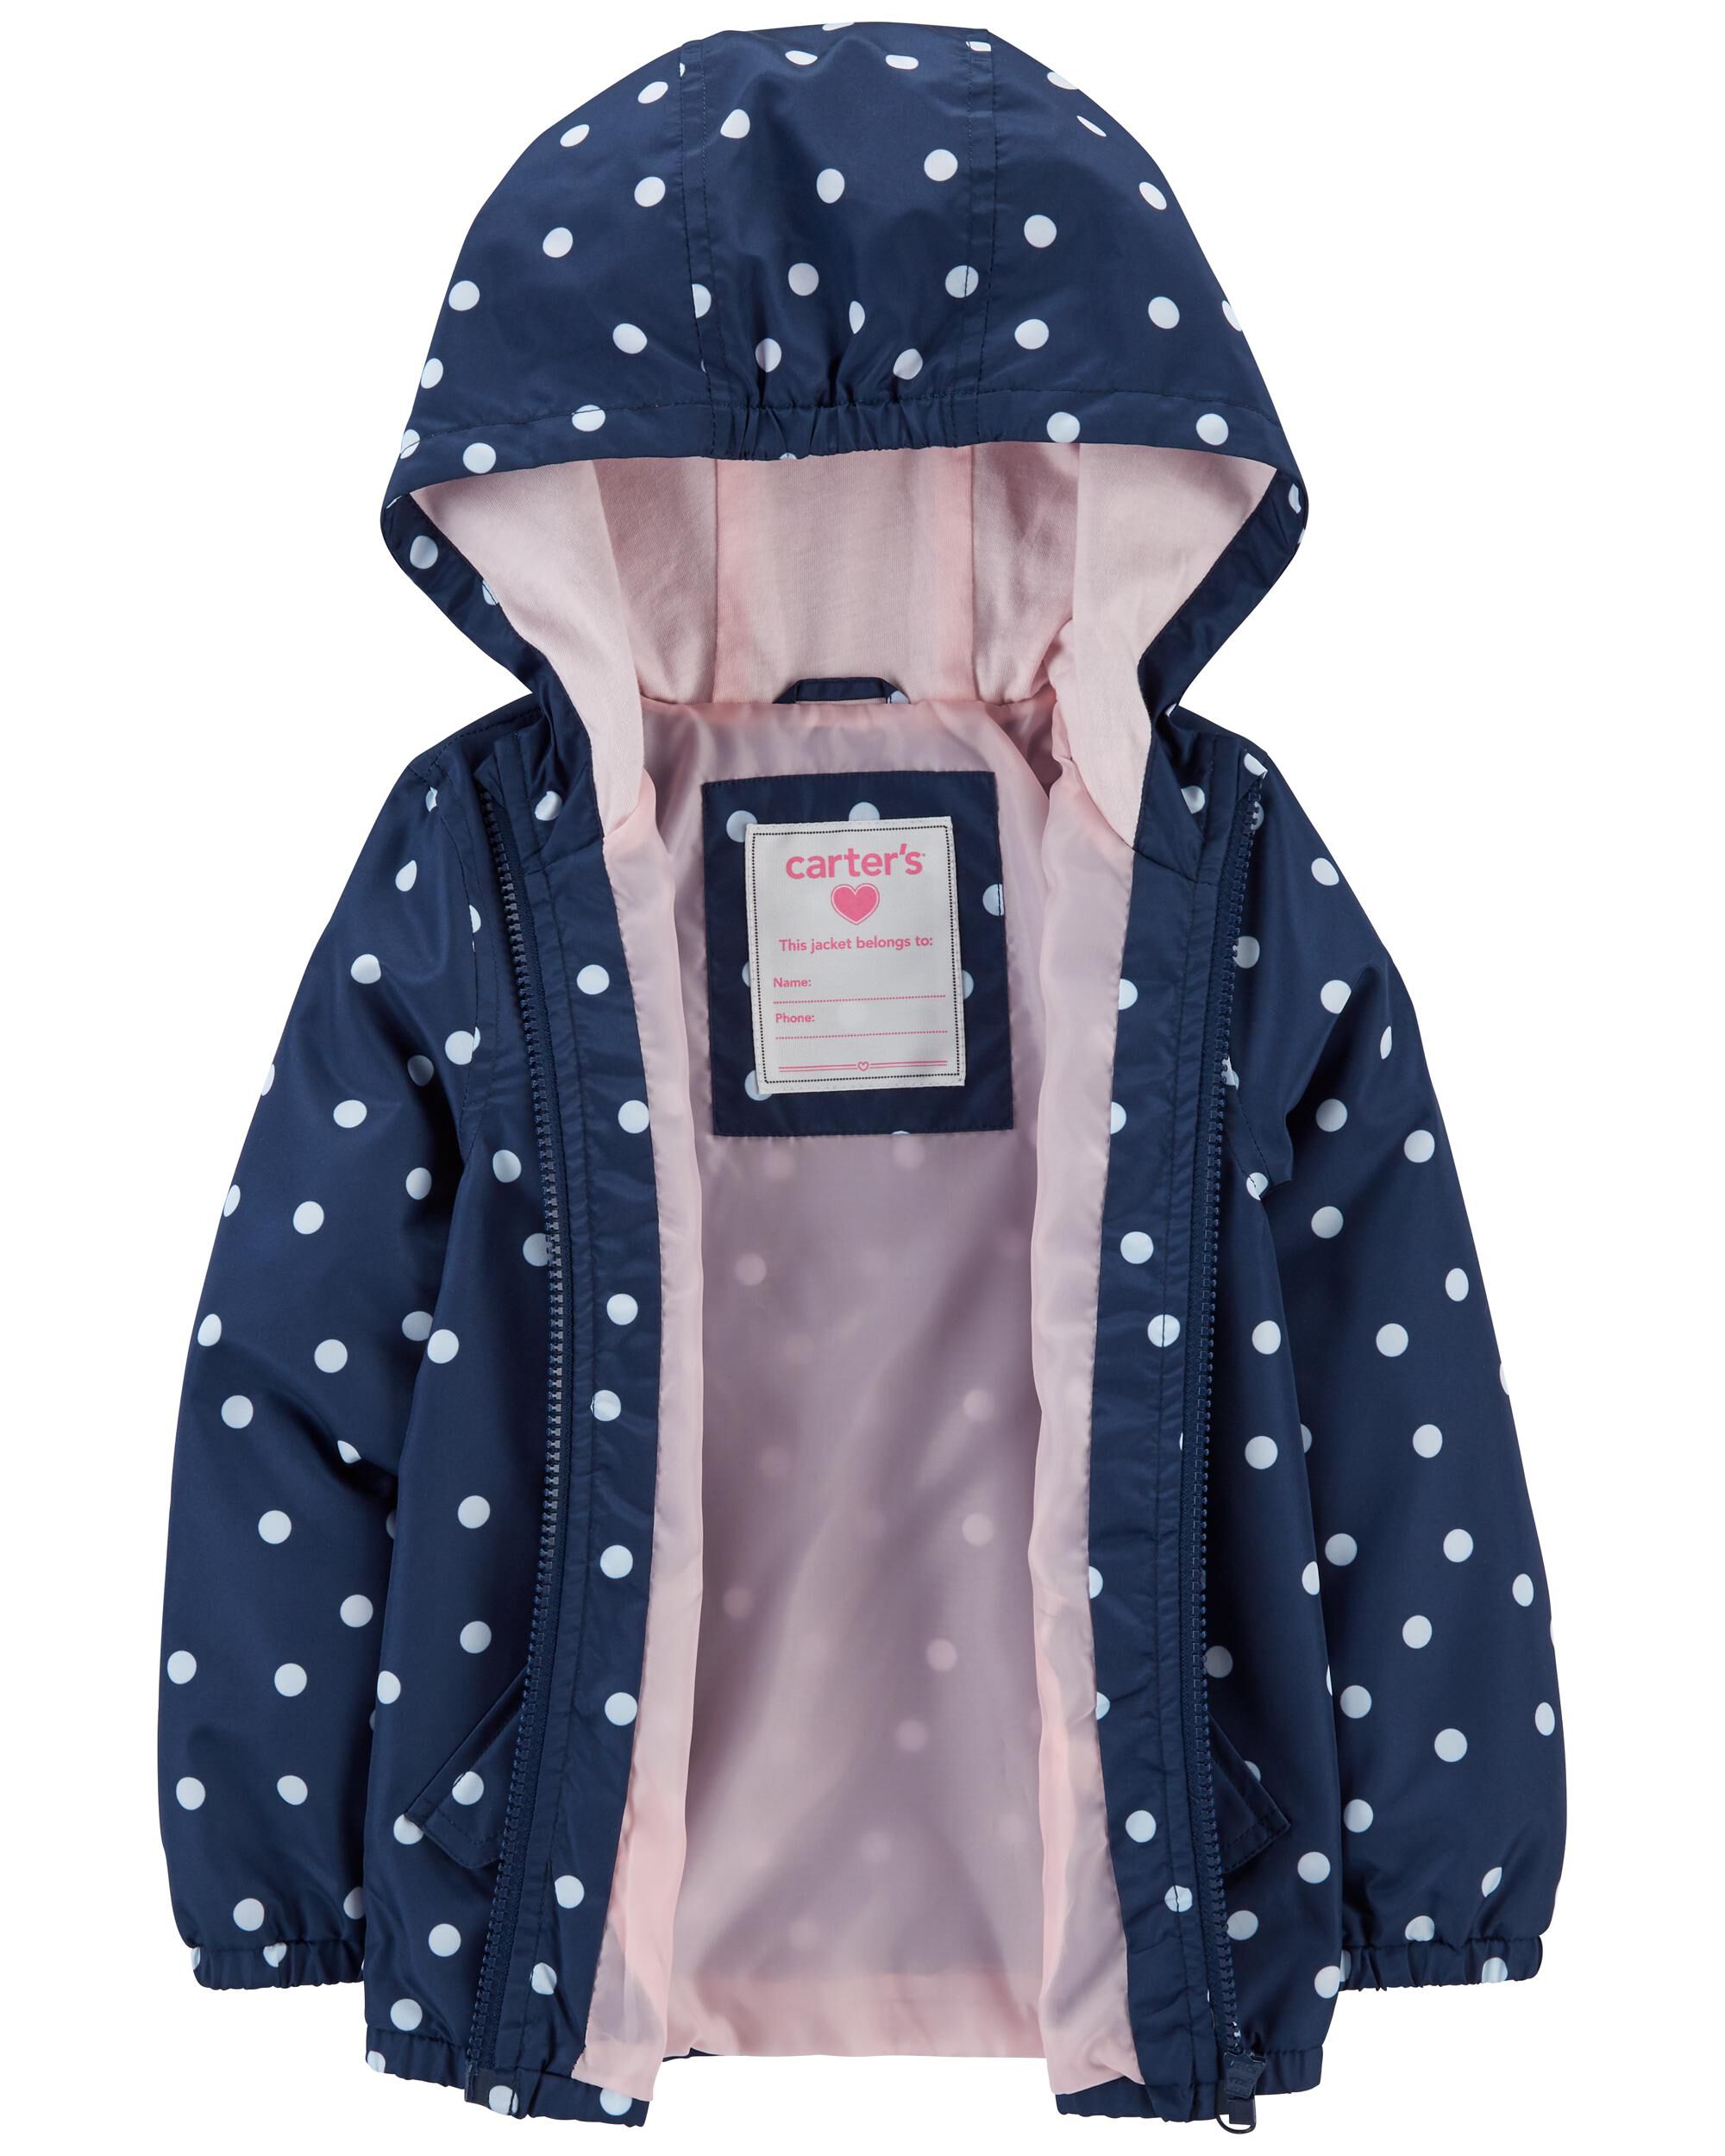 Carter's Toddler Girls' Fleece Lined Puffer Jacket Coat 4T, Turquoise Heart 